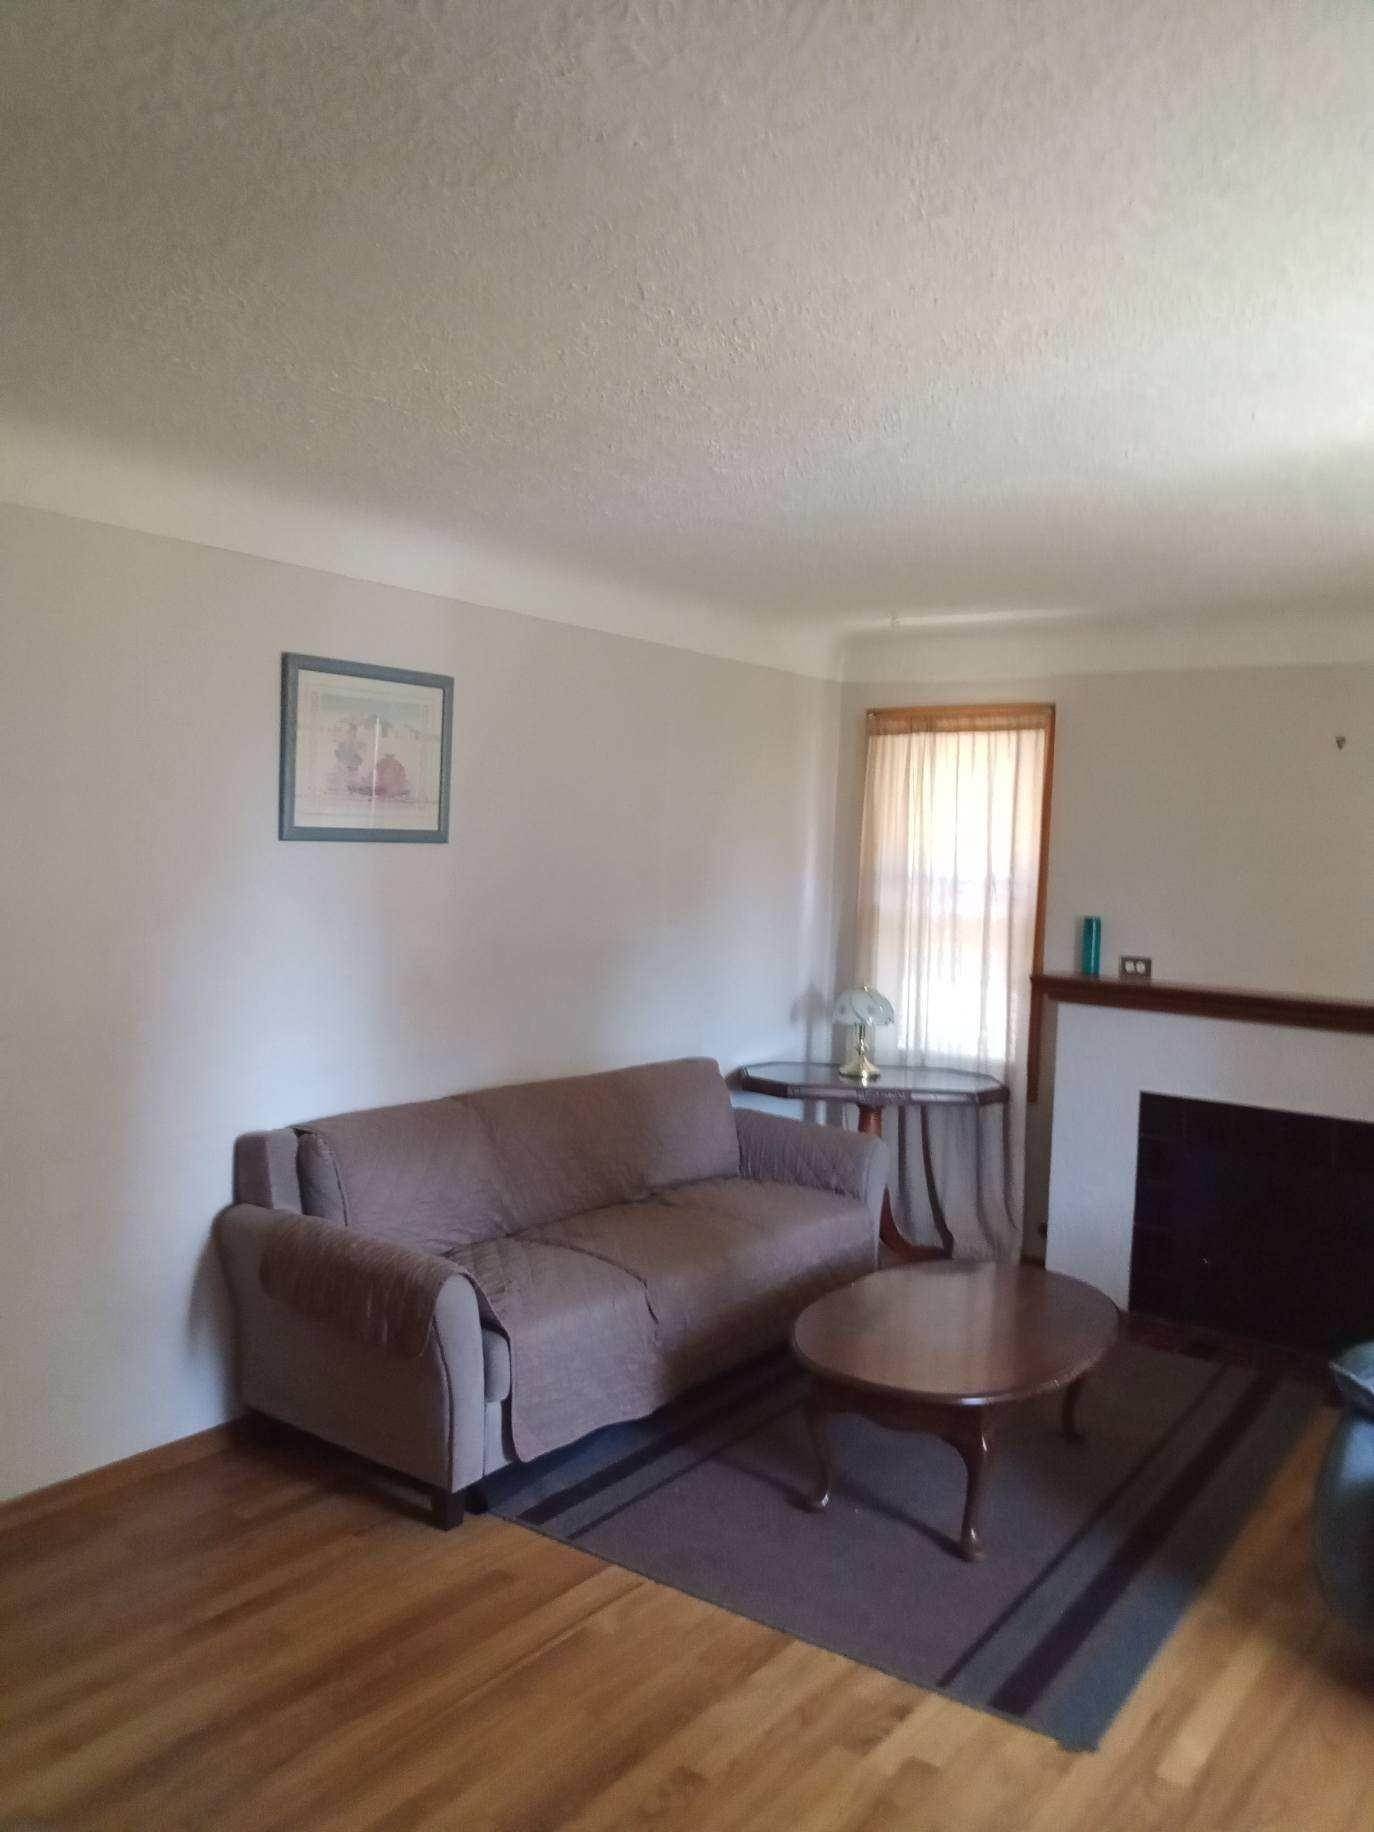 18. Single Family Homes for Sale at 410 W Knox Avenue Spokane, Washington 99205 United States